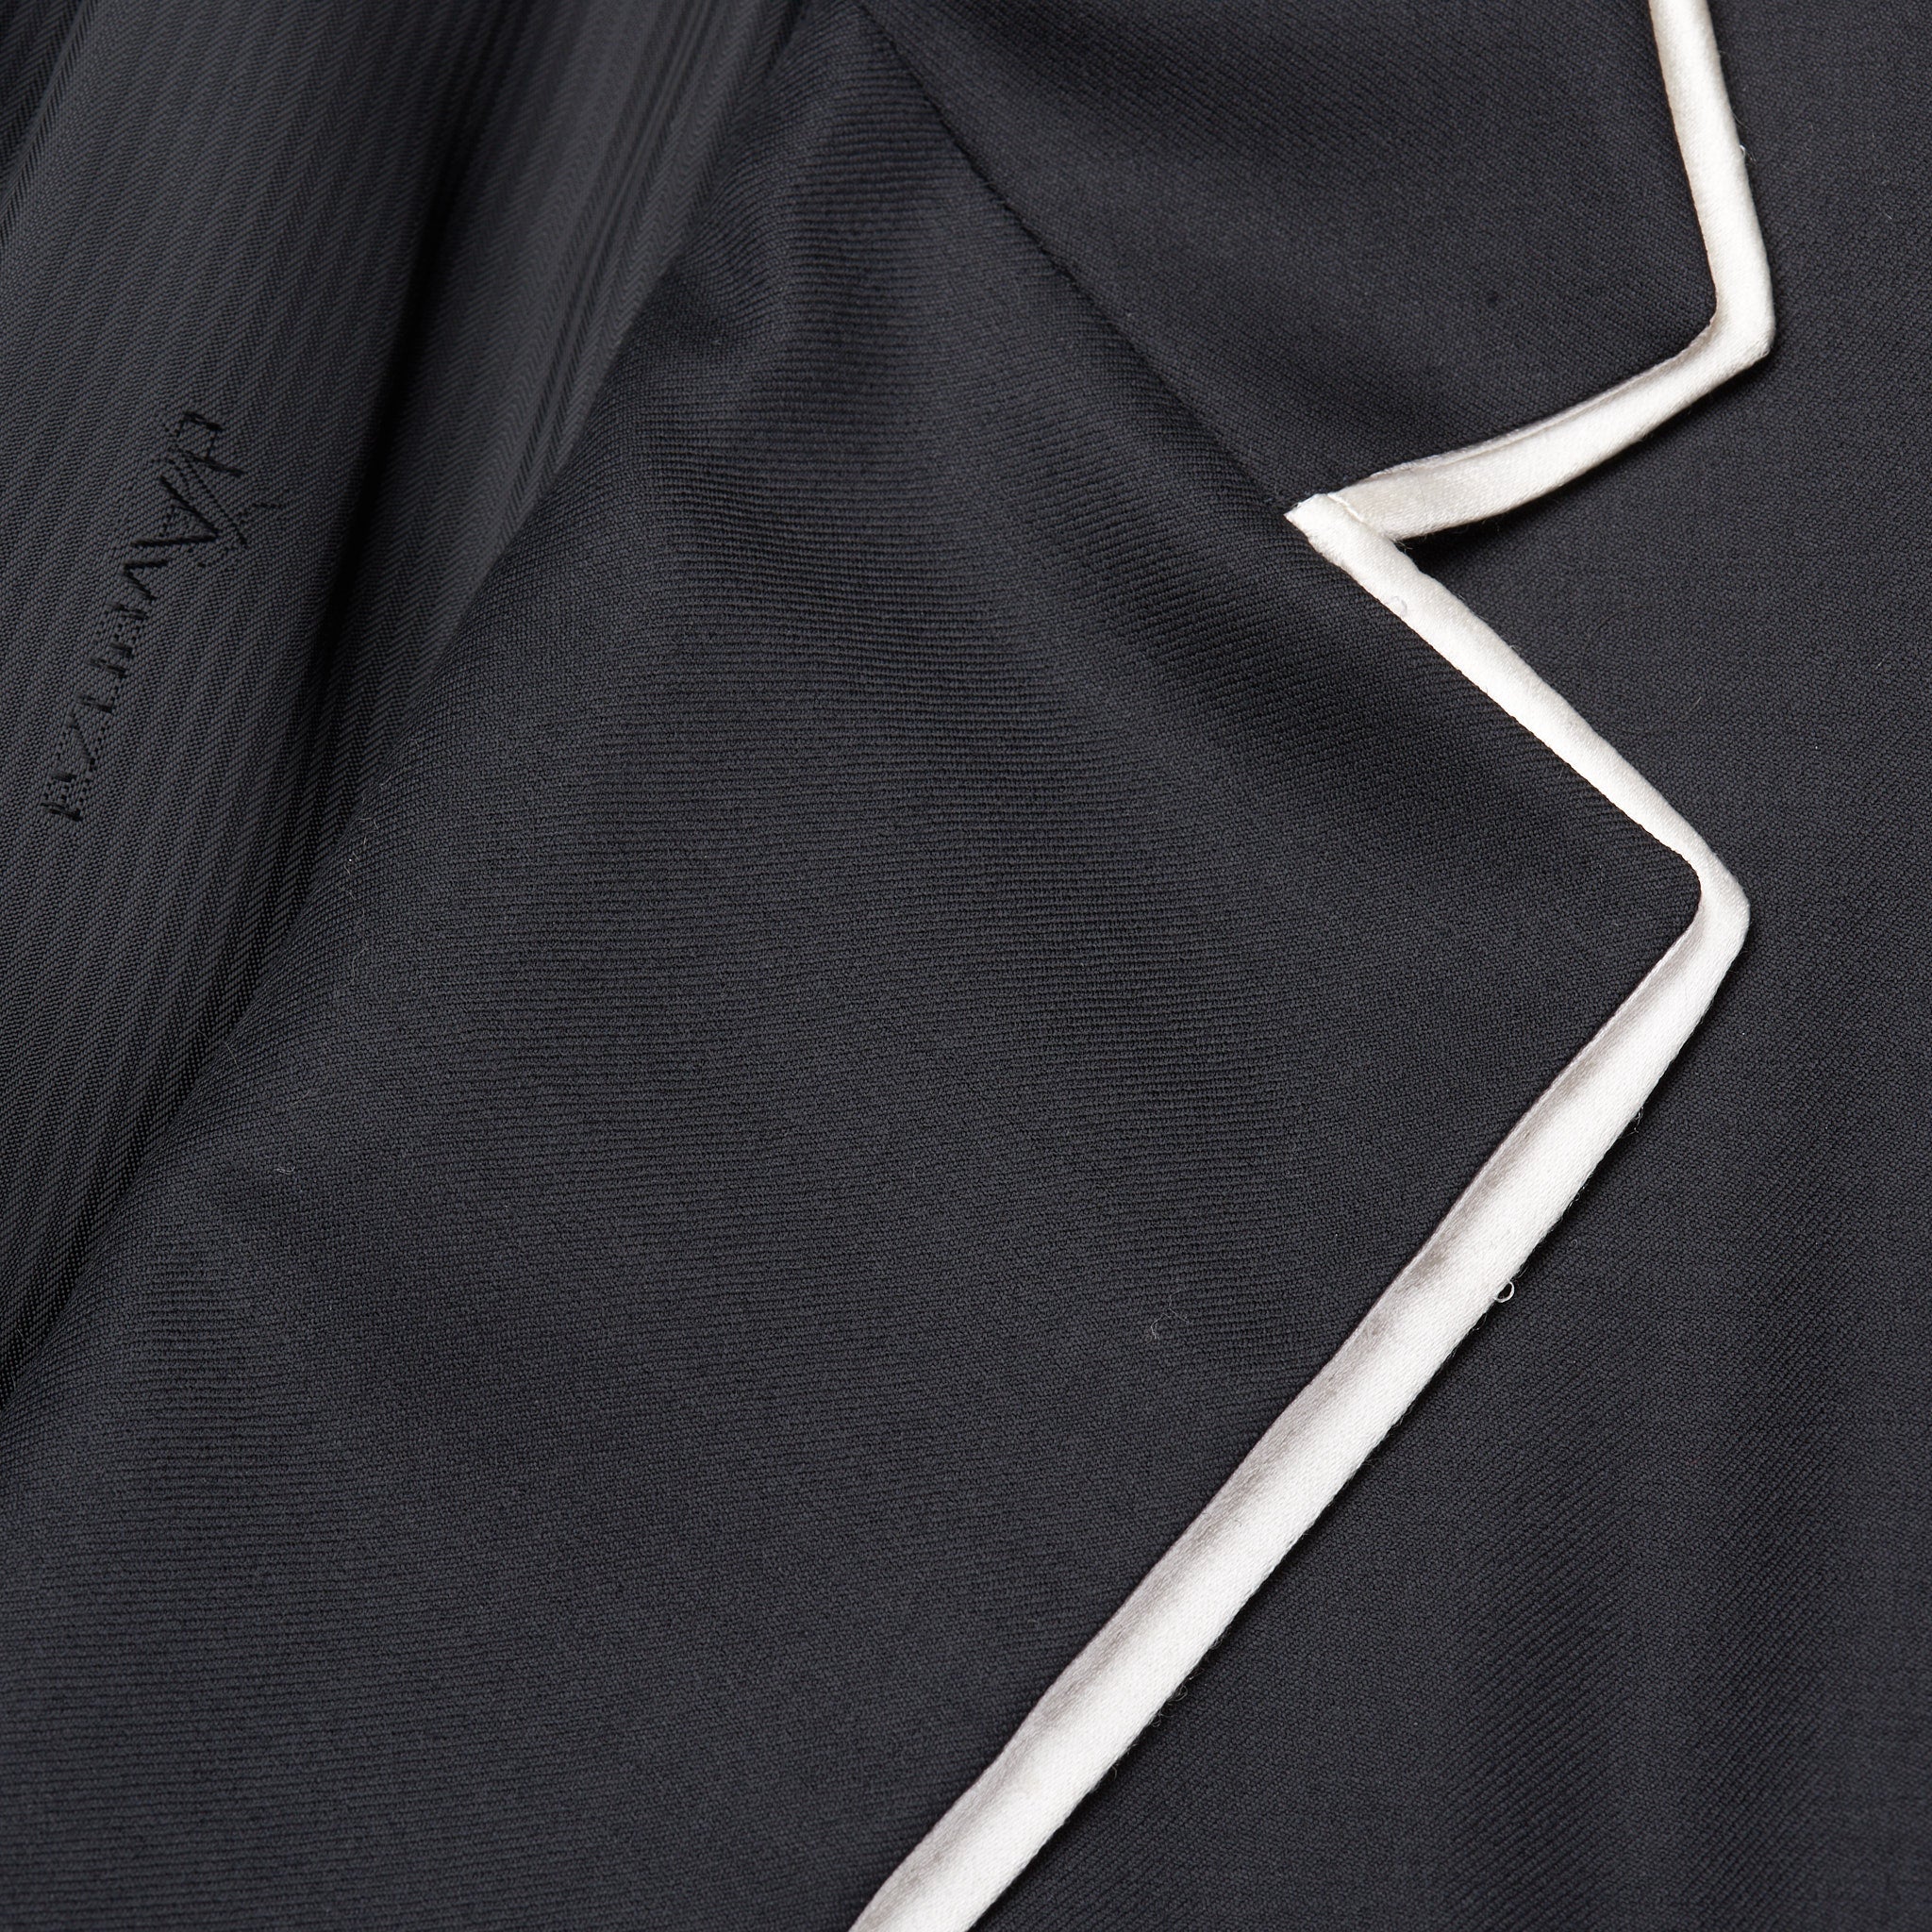 D'AVENZA Handmade Black Wool Super 150's Formal Suit EU 56 NEW US 46 D'AVENZA